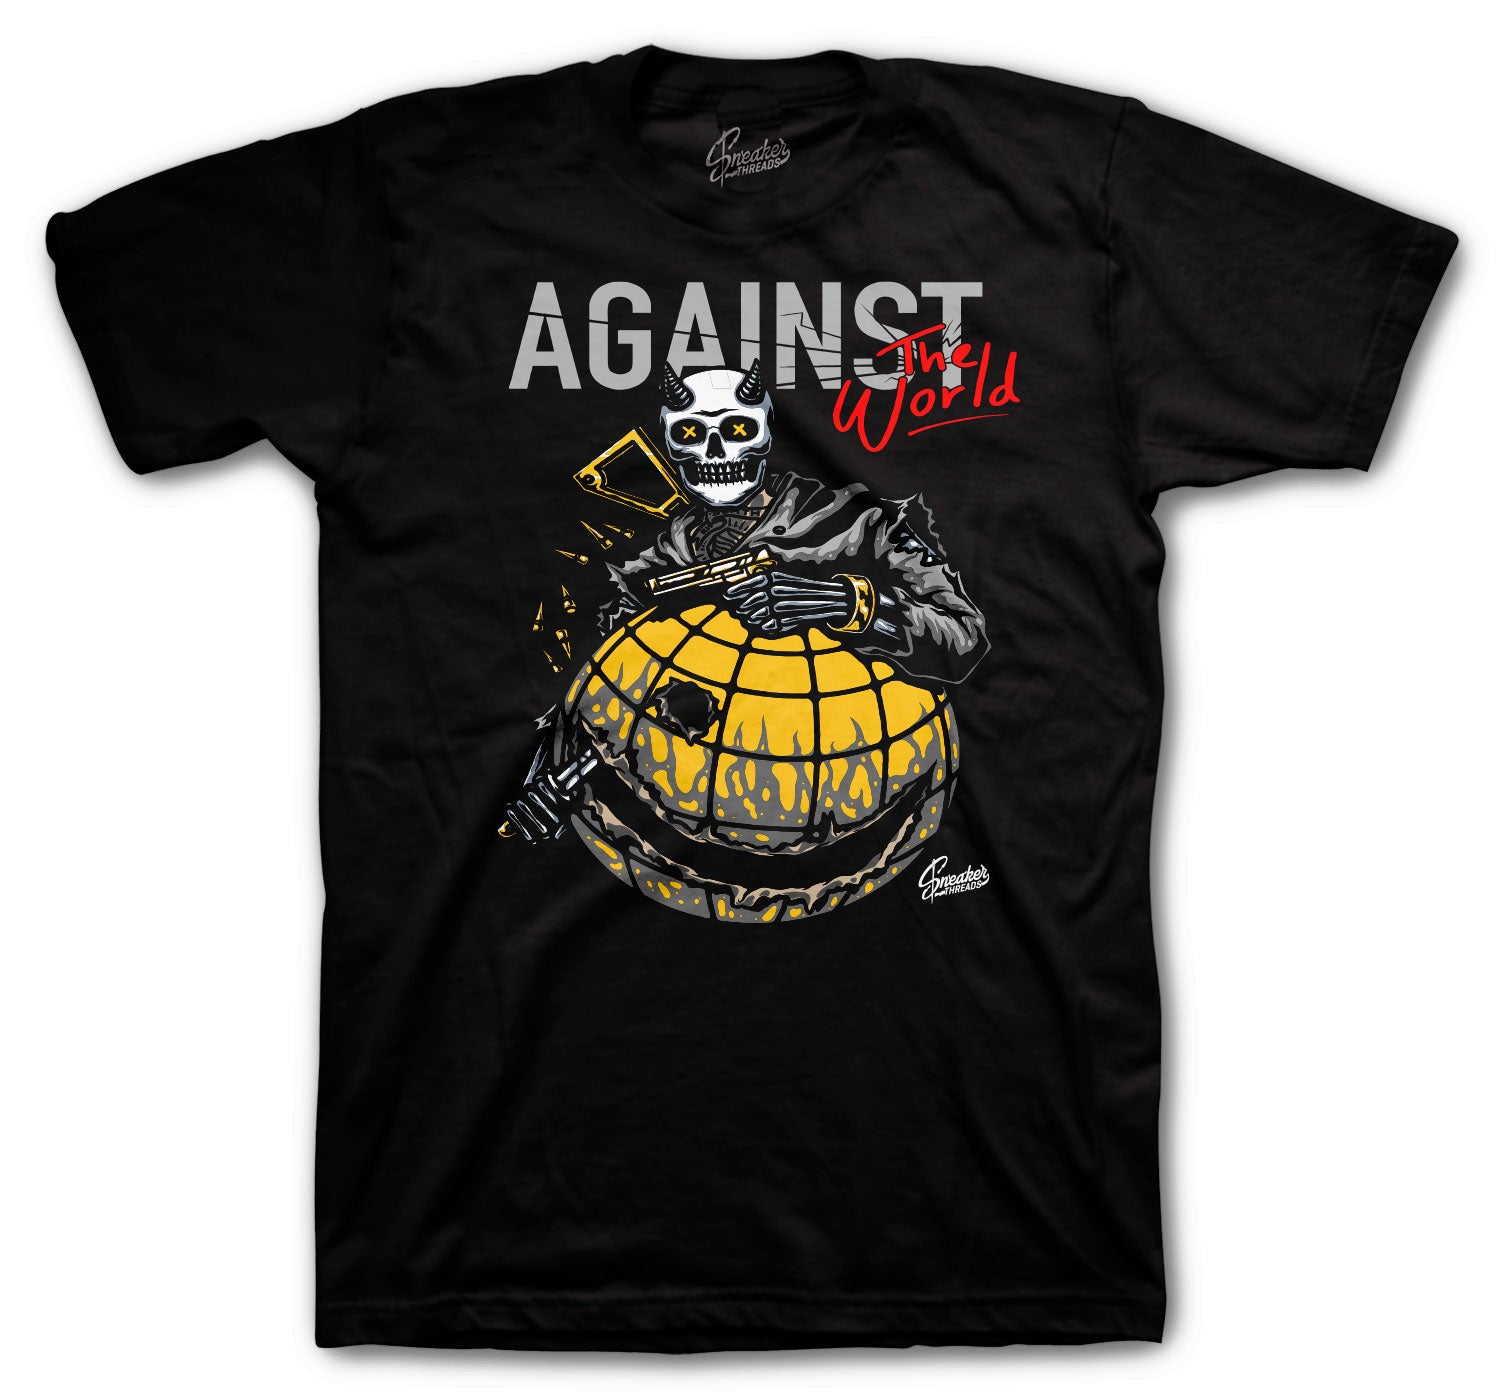 Retro 3 Cool Grey Shirt - Against The World - Black